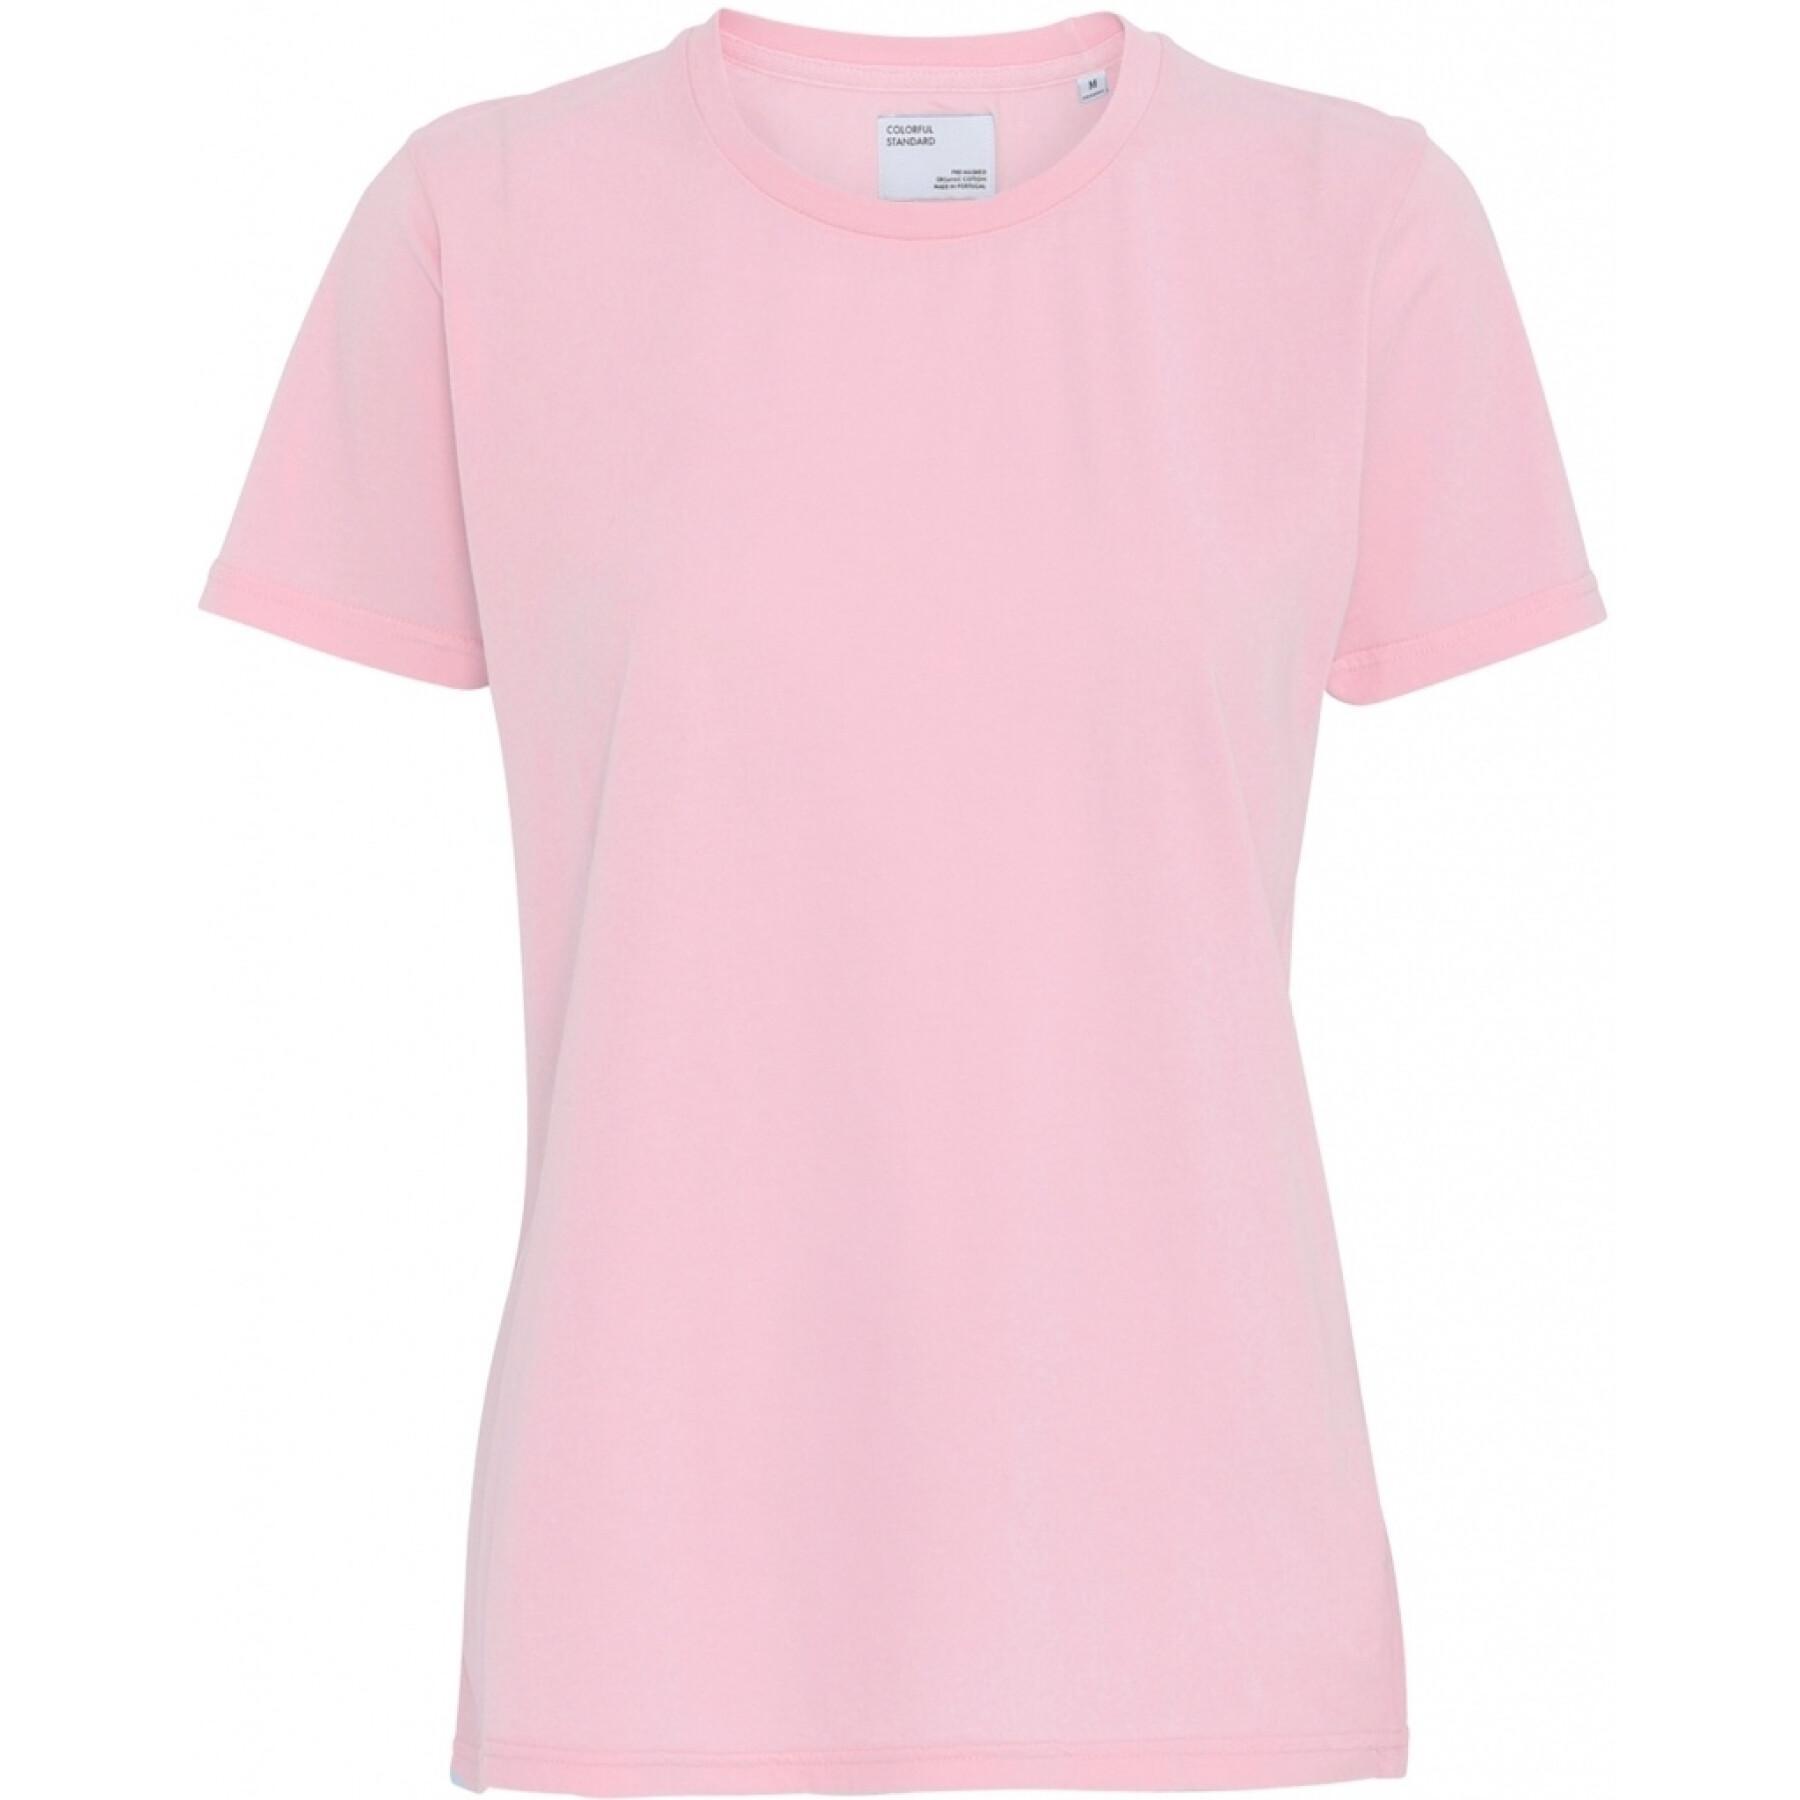 Camiseta feminina Colorful Standard Light Organic flamingo pink